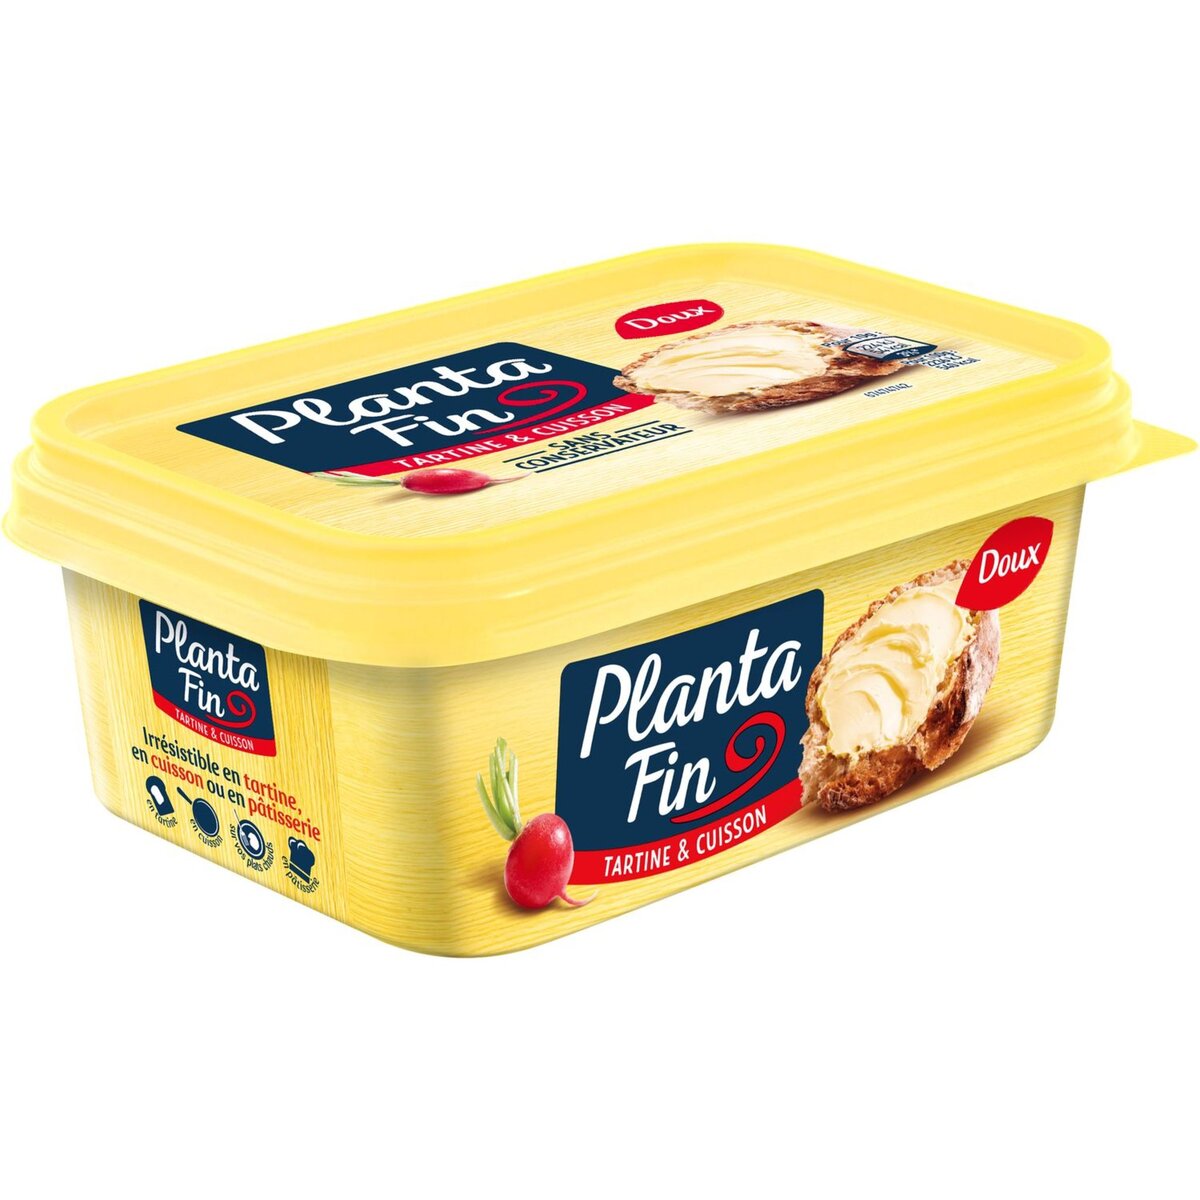 PLANTA FIN Planta fin margarine tartine & cuisson doux 250g